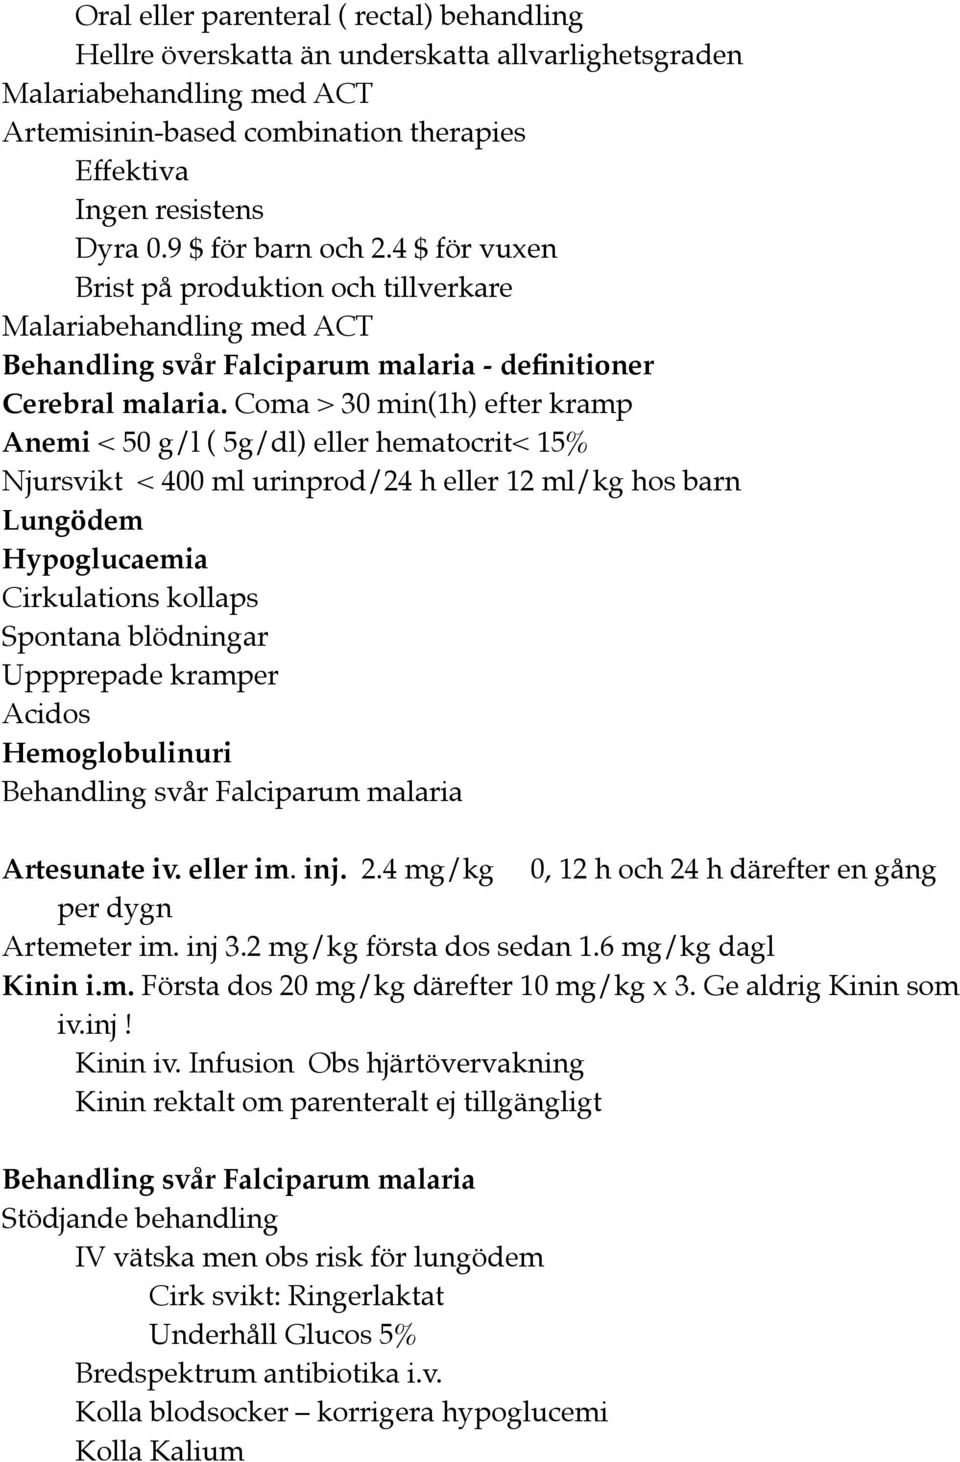 Coma > 30 min(1h) efter kramp Anemi < 50 g/l ( 5g/dl) eller hematocrit< 15% Njursvikt < 400 ml urinprod/24 h eller 12 ml/kg hos barn Lungödem Hypoglucaemia Cirkulations kollaps Spontana blödningar